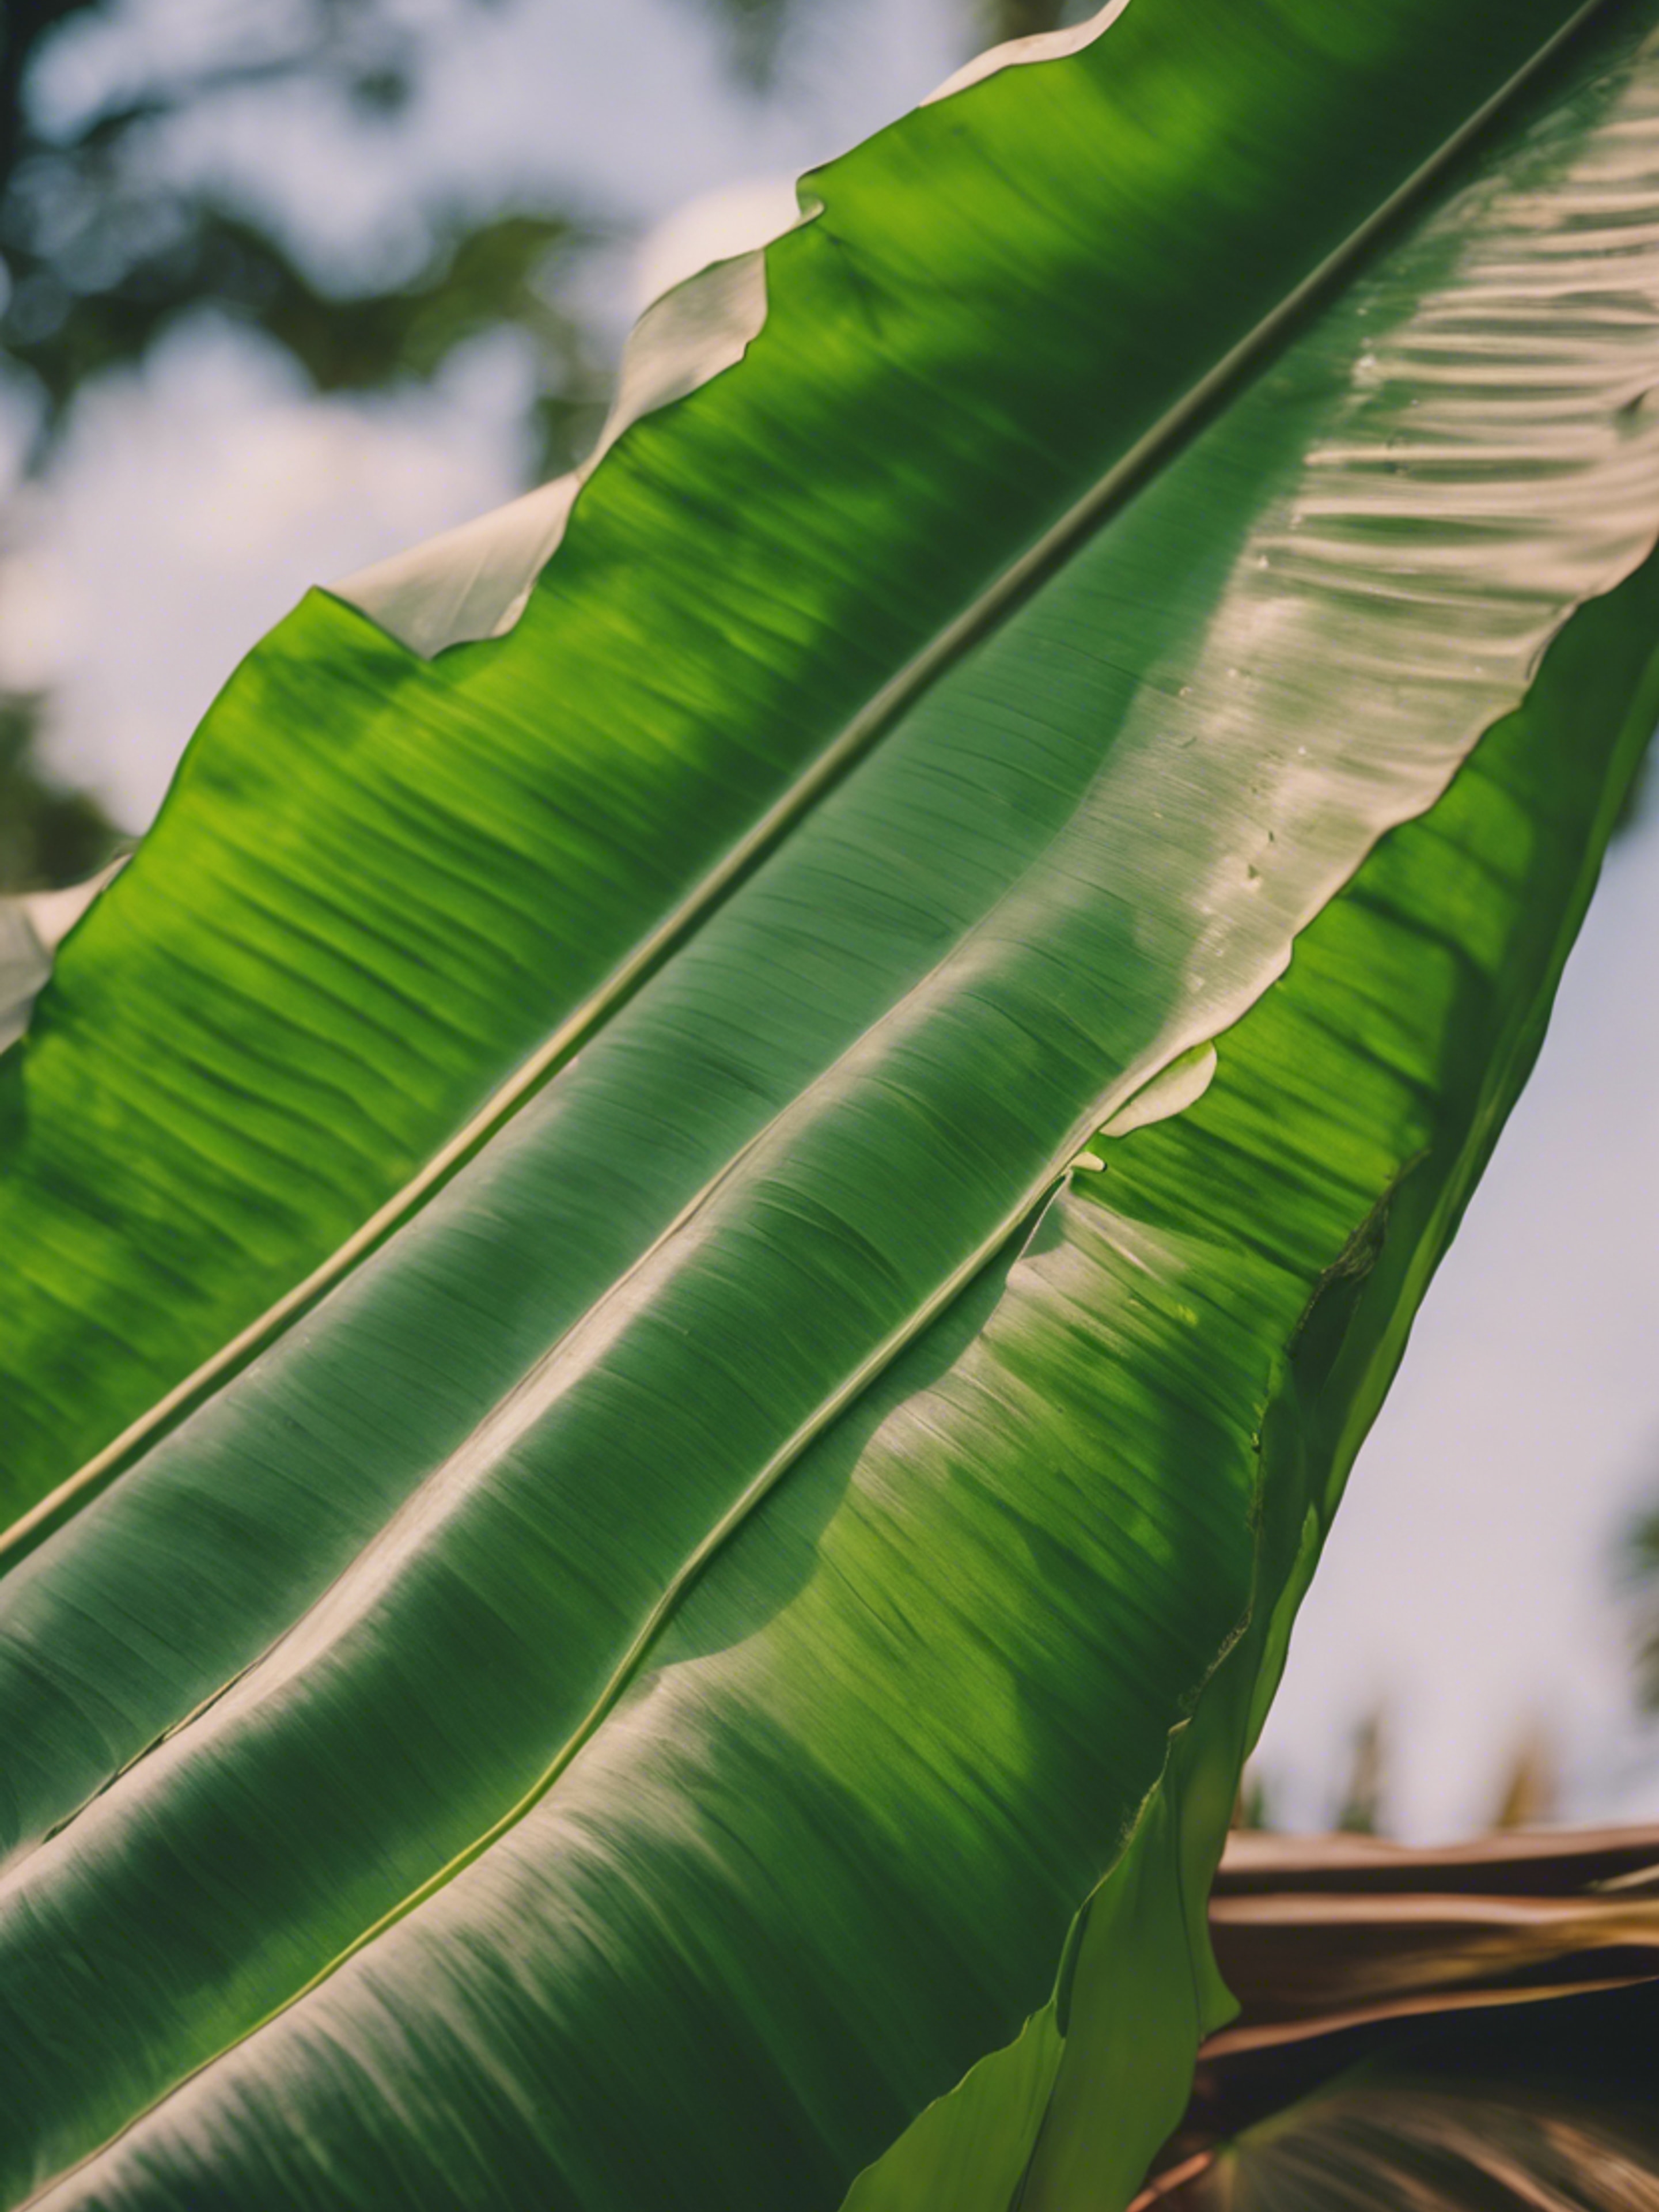 A banana leaf fashioned into a simple but sturdy homemade kite. Tapetai[67483886efc74c5189dd]